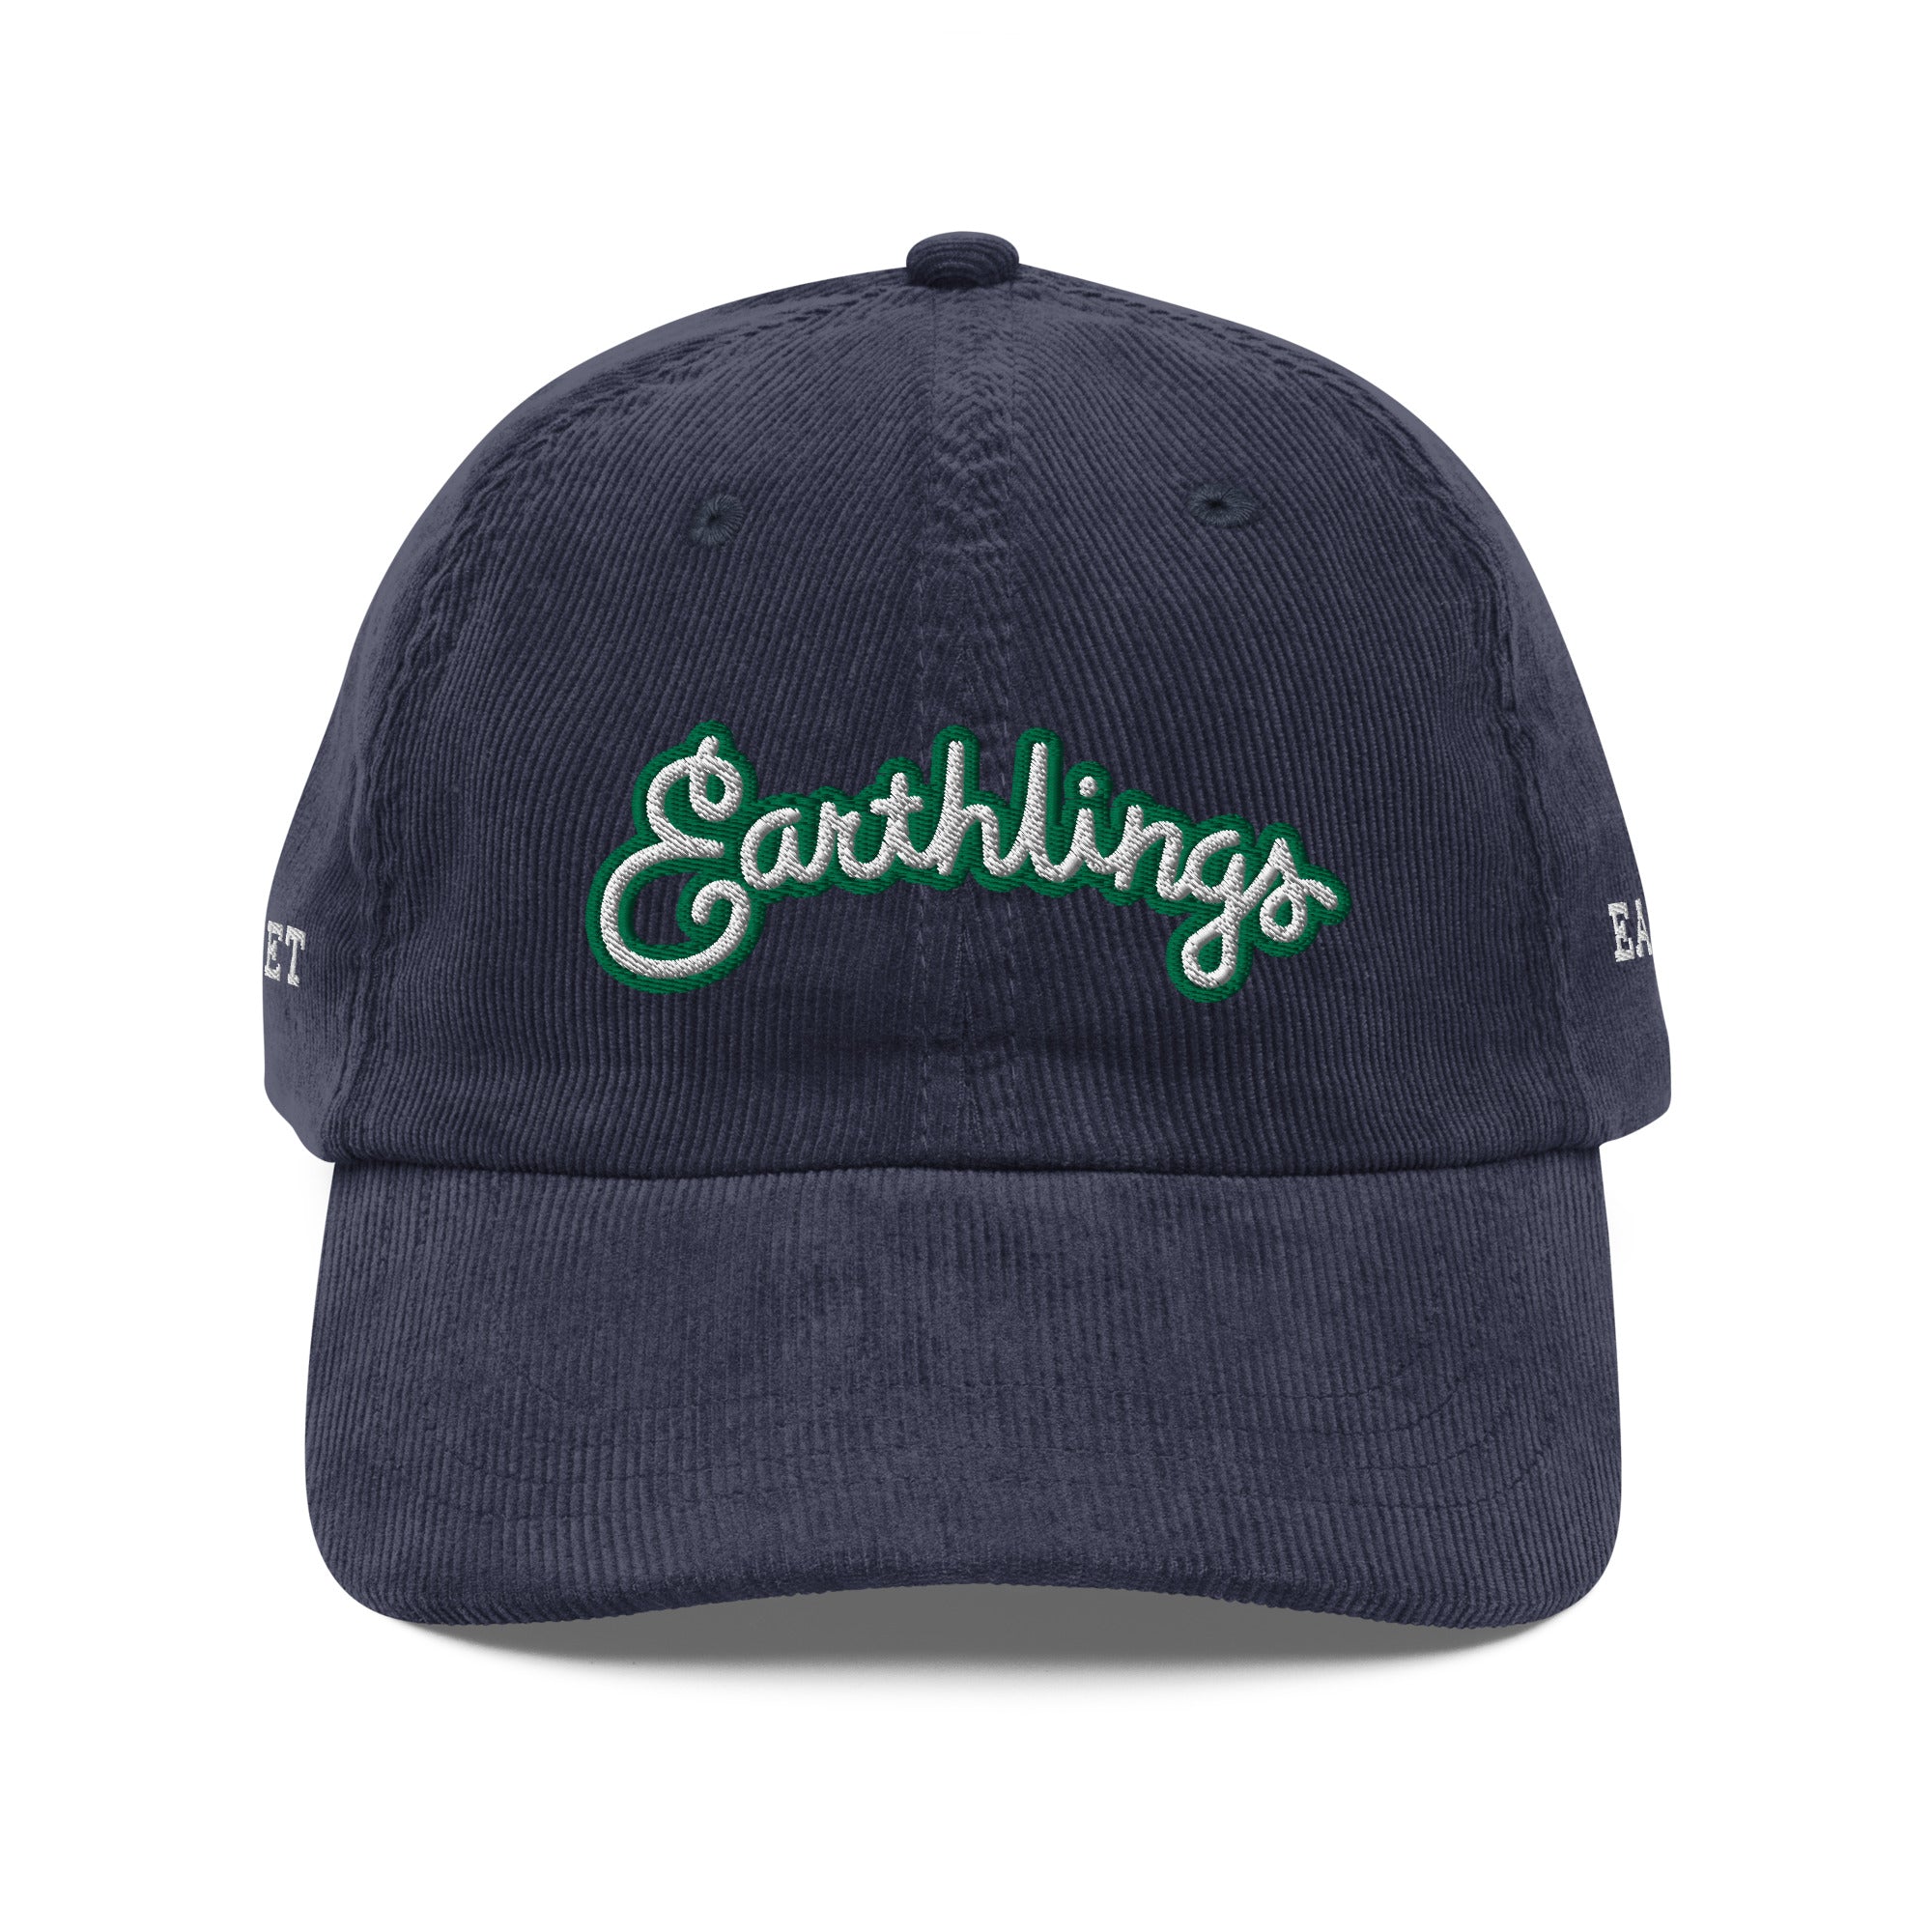 Vintage corduroy cap